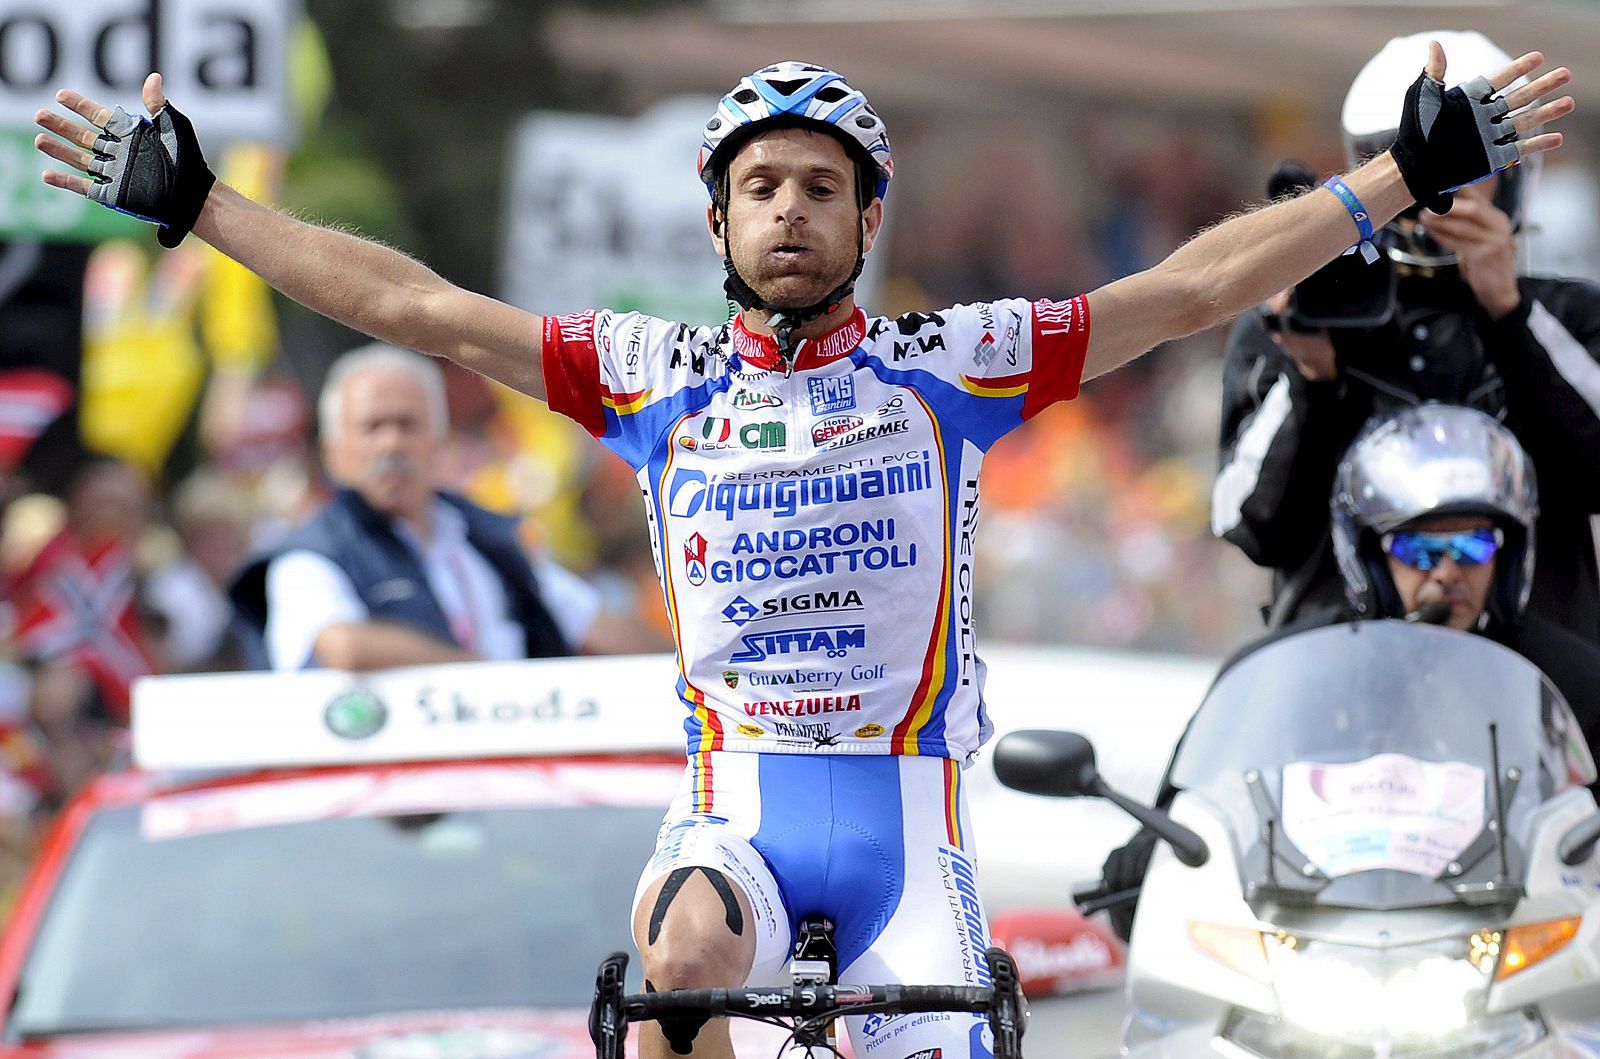 El ciclista italiano Michele Scarponi celebra su victoria en la sexta etapa.